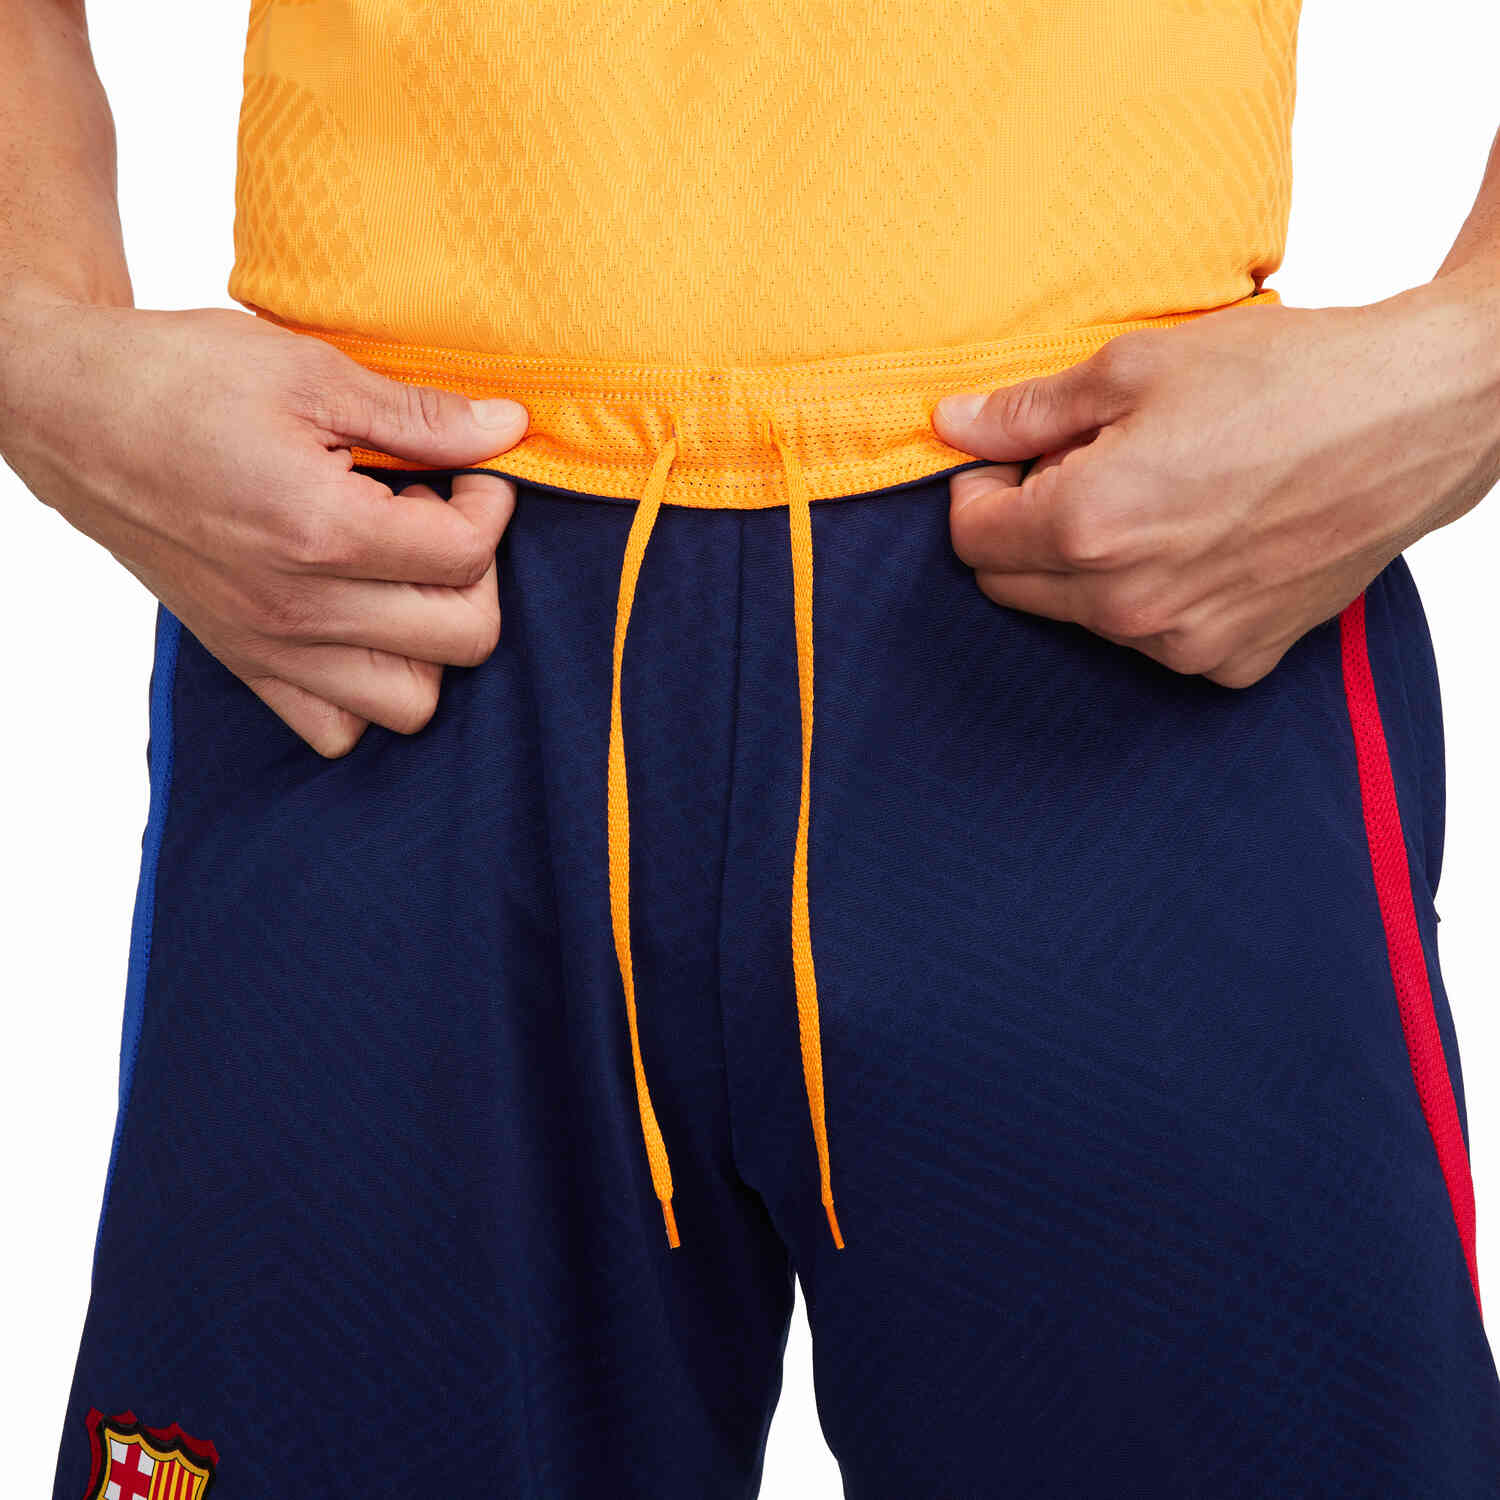 Nike Barcelona Strike Training Shorts - Blue Void/University Red/Vivid ...